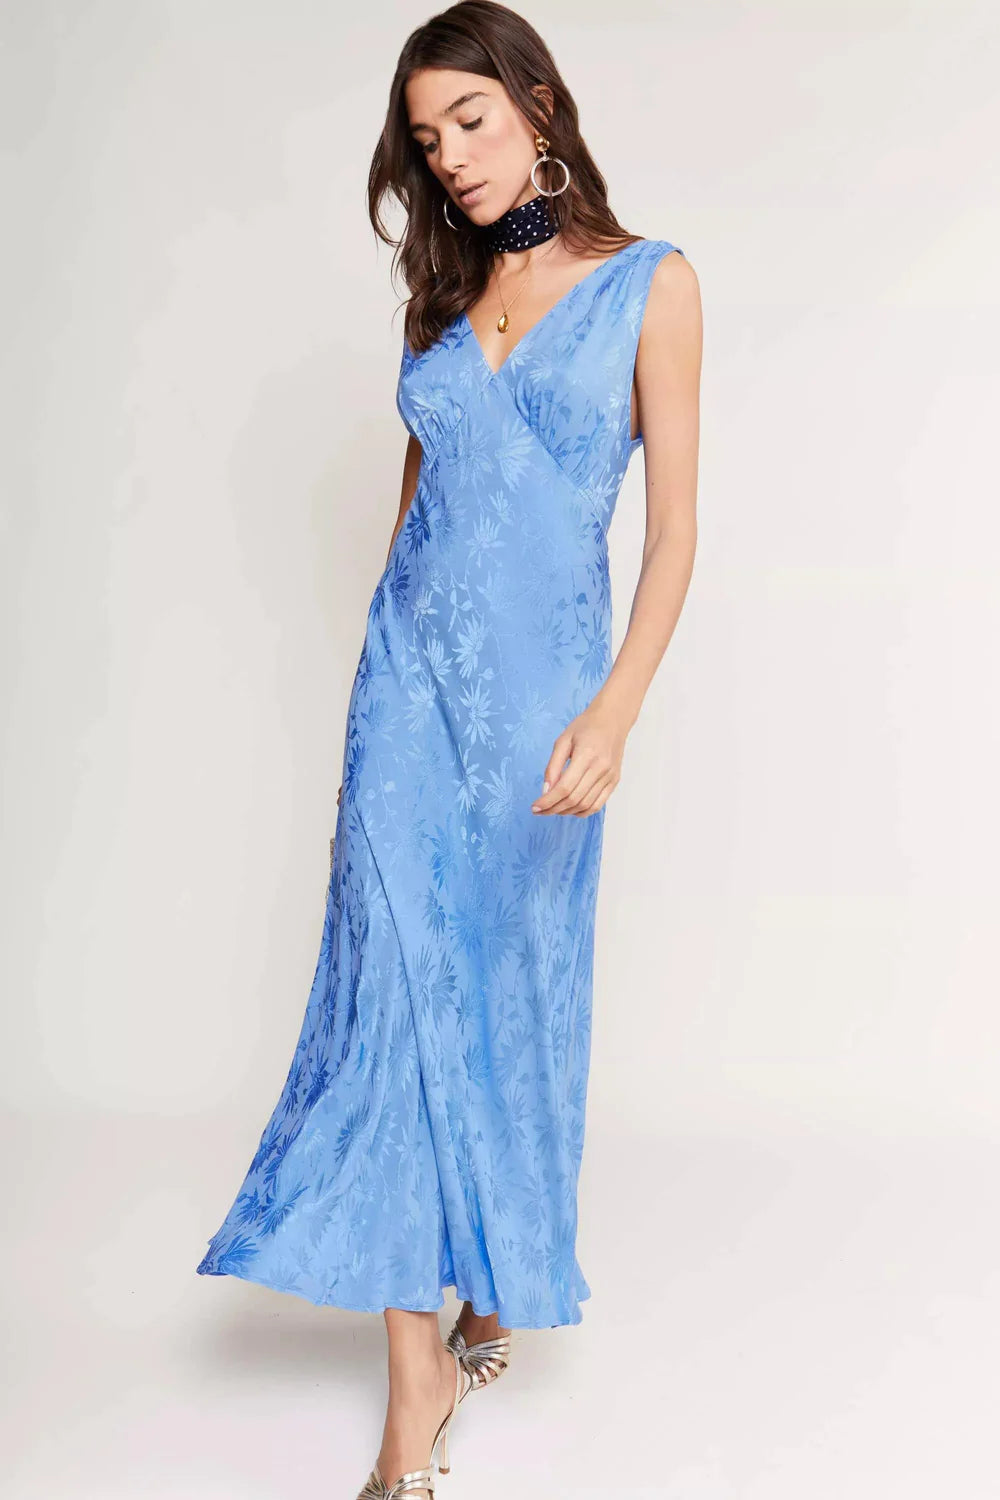 RIXO - Sandrine Dress in Daisy Jacquard Blue